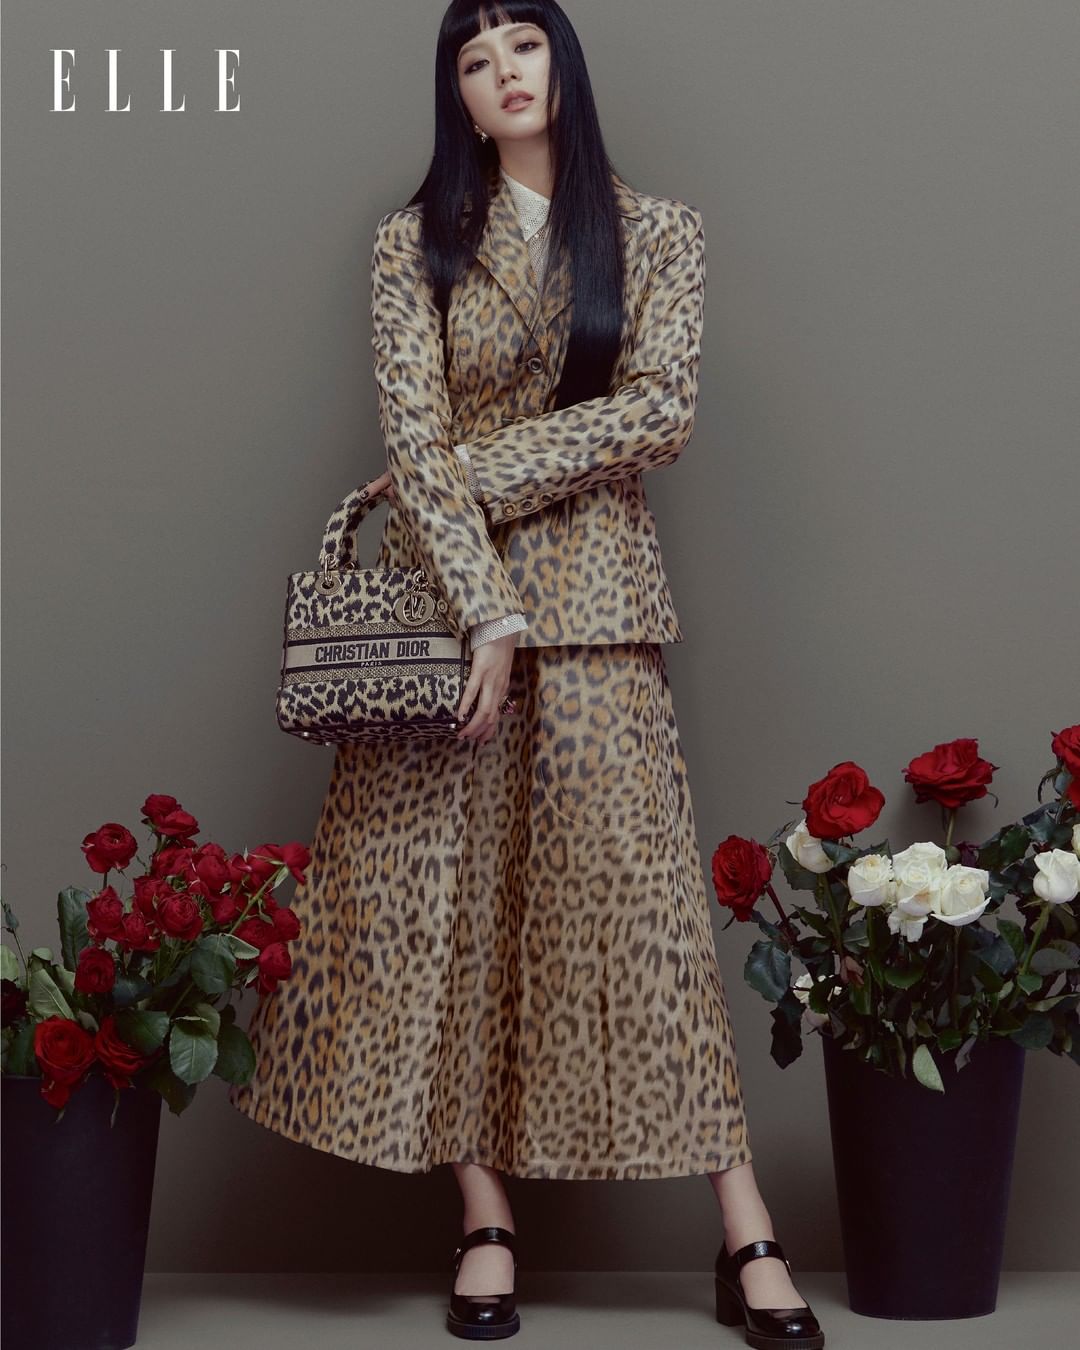 Jisoo BLACKPINK lần đầu tiên dự show Dior Haute Couture